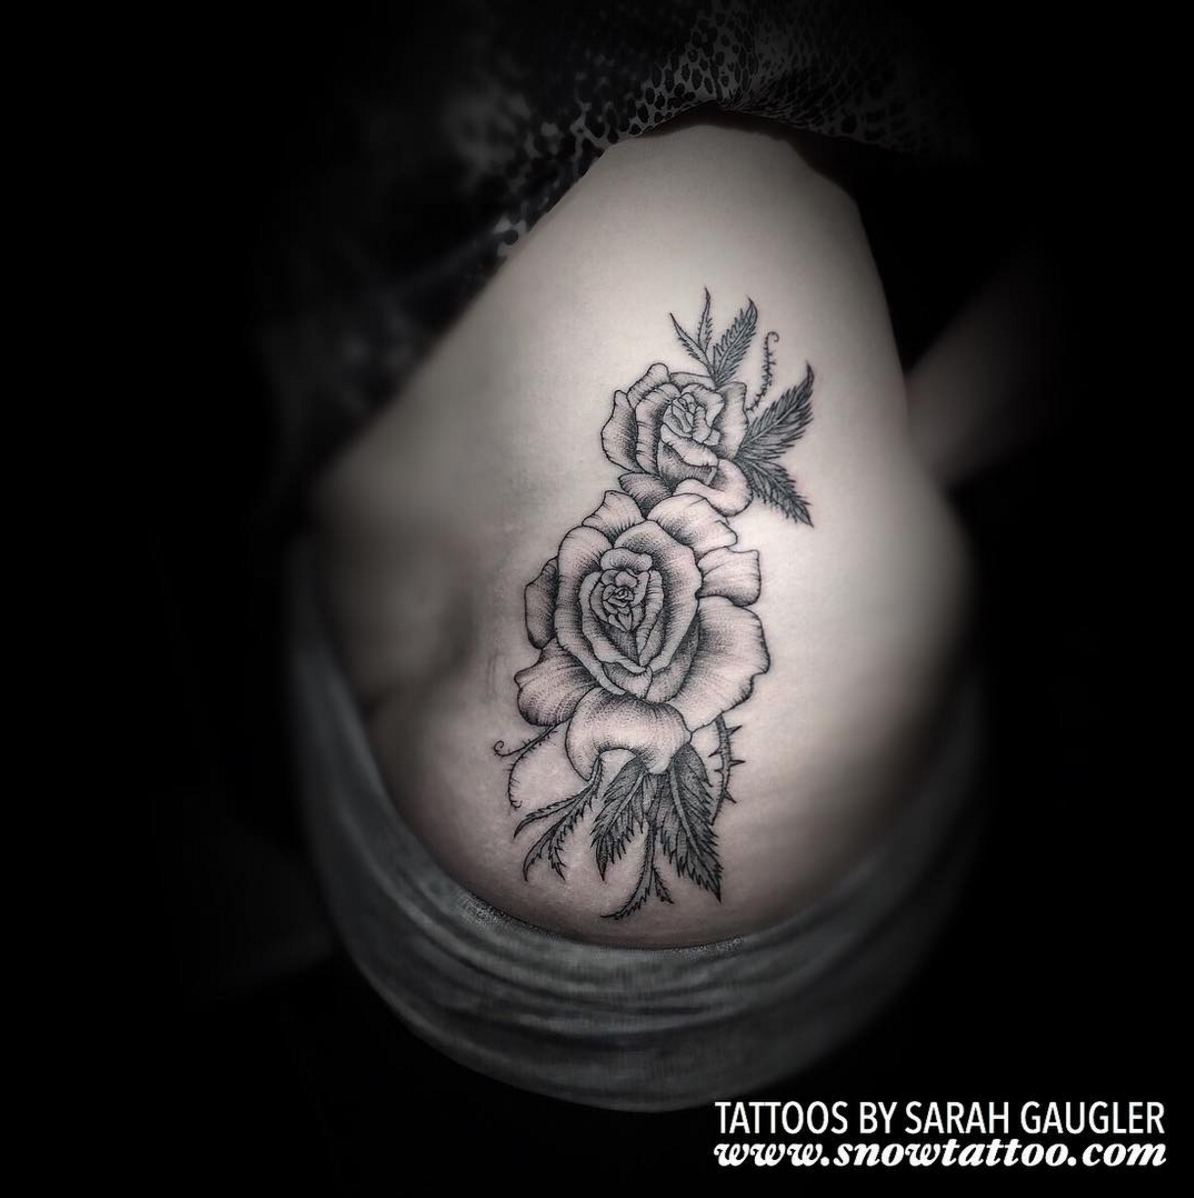 Sarah Gaugler Snow Tattoo Custom Floral Roses Rose Hip New York Best Tattoos Best Tattoo Artist NYC.png